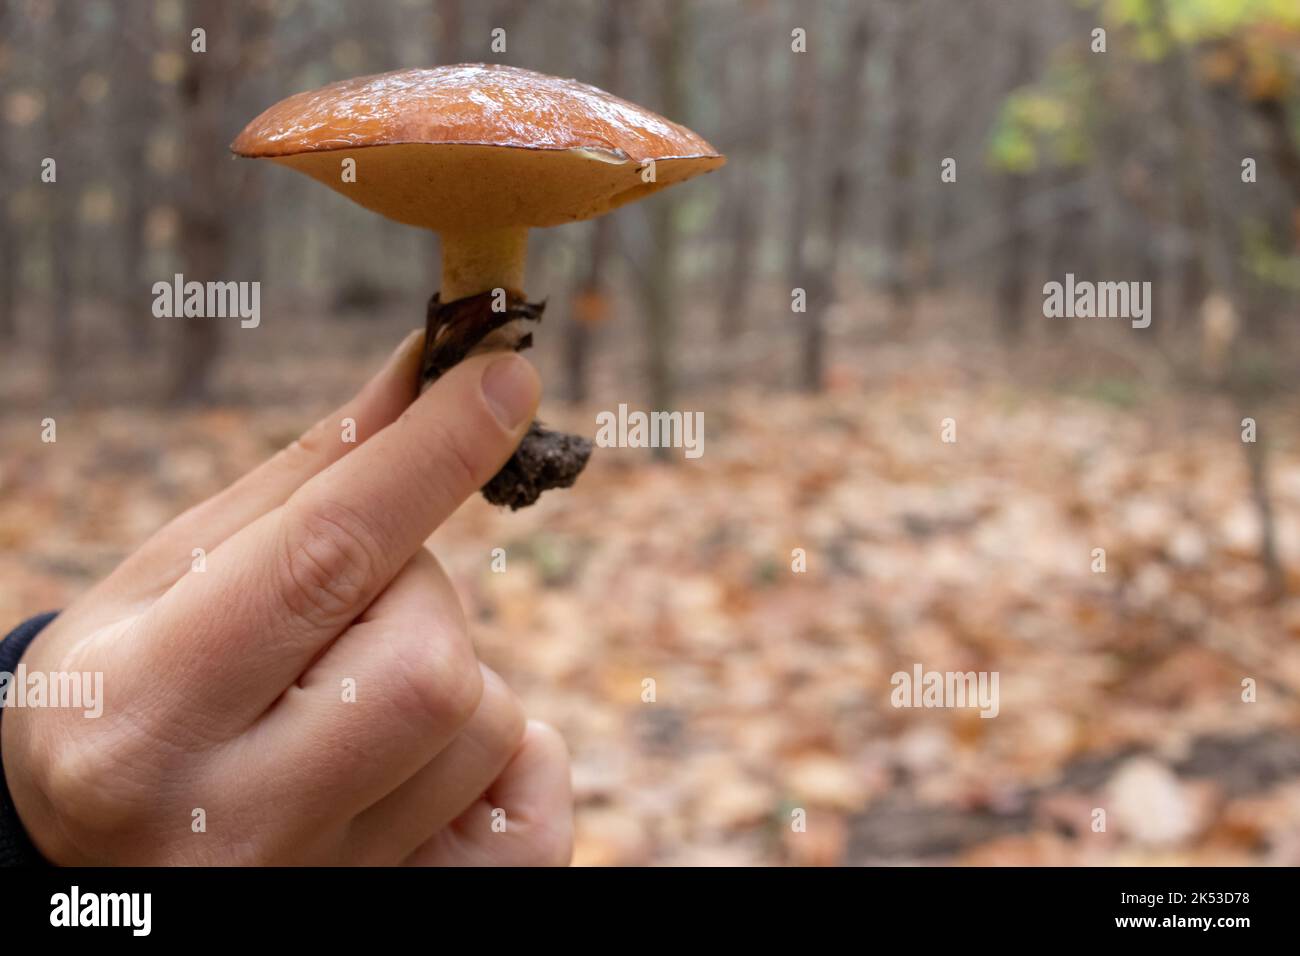 Hand holding mushroom. Slippery jack, Suillus luteus mushroom with sticky brown cap in hand in autumn forest. Mushroom hunting, mushrooming Stock Photo